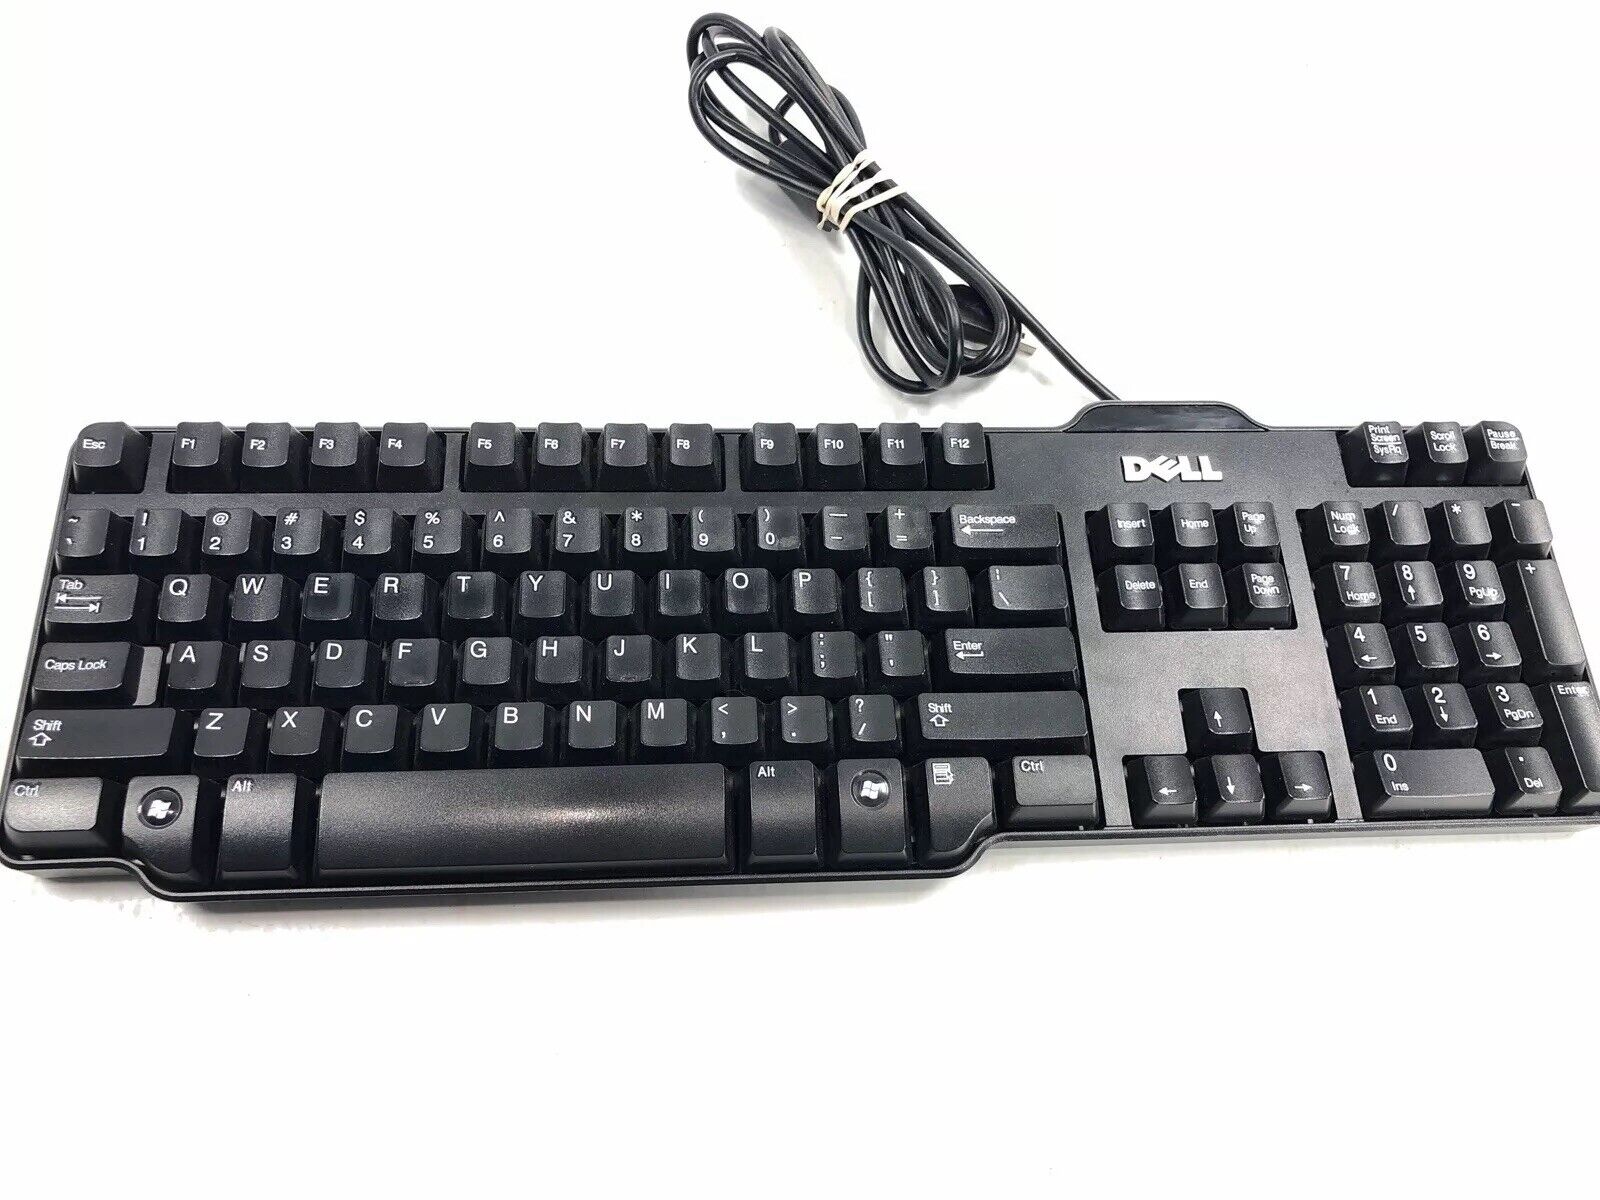 Dell Computer Plug In USB Keyboard Model L100 RH659